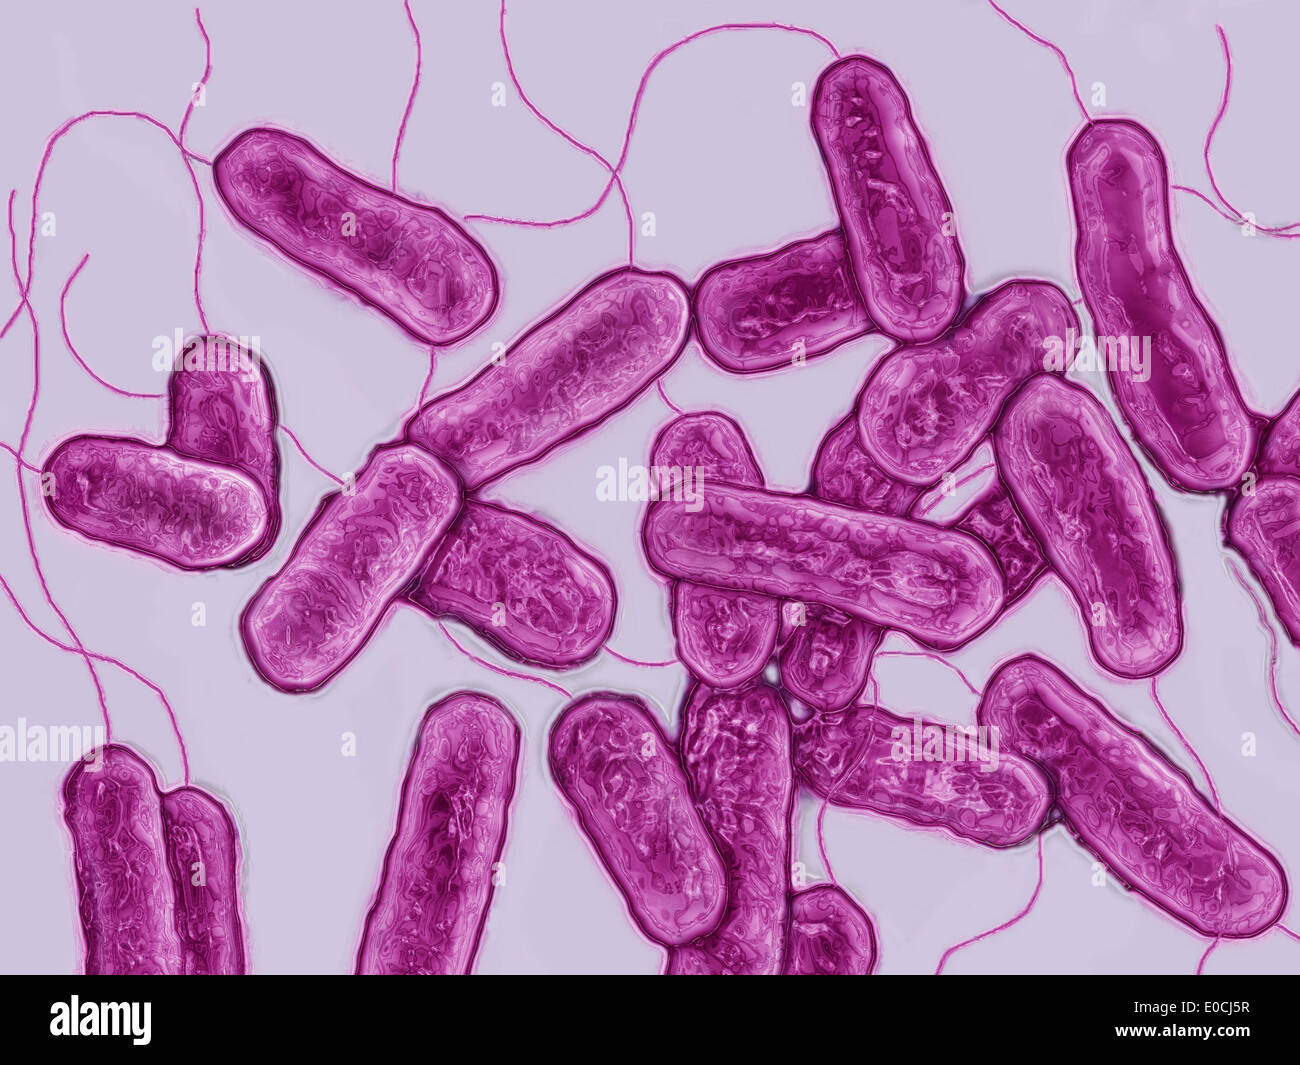 Legionella pneumophila bacteria hi-res stock photography and images - Alamy